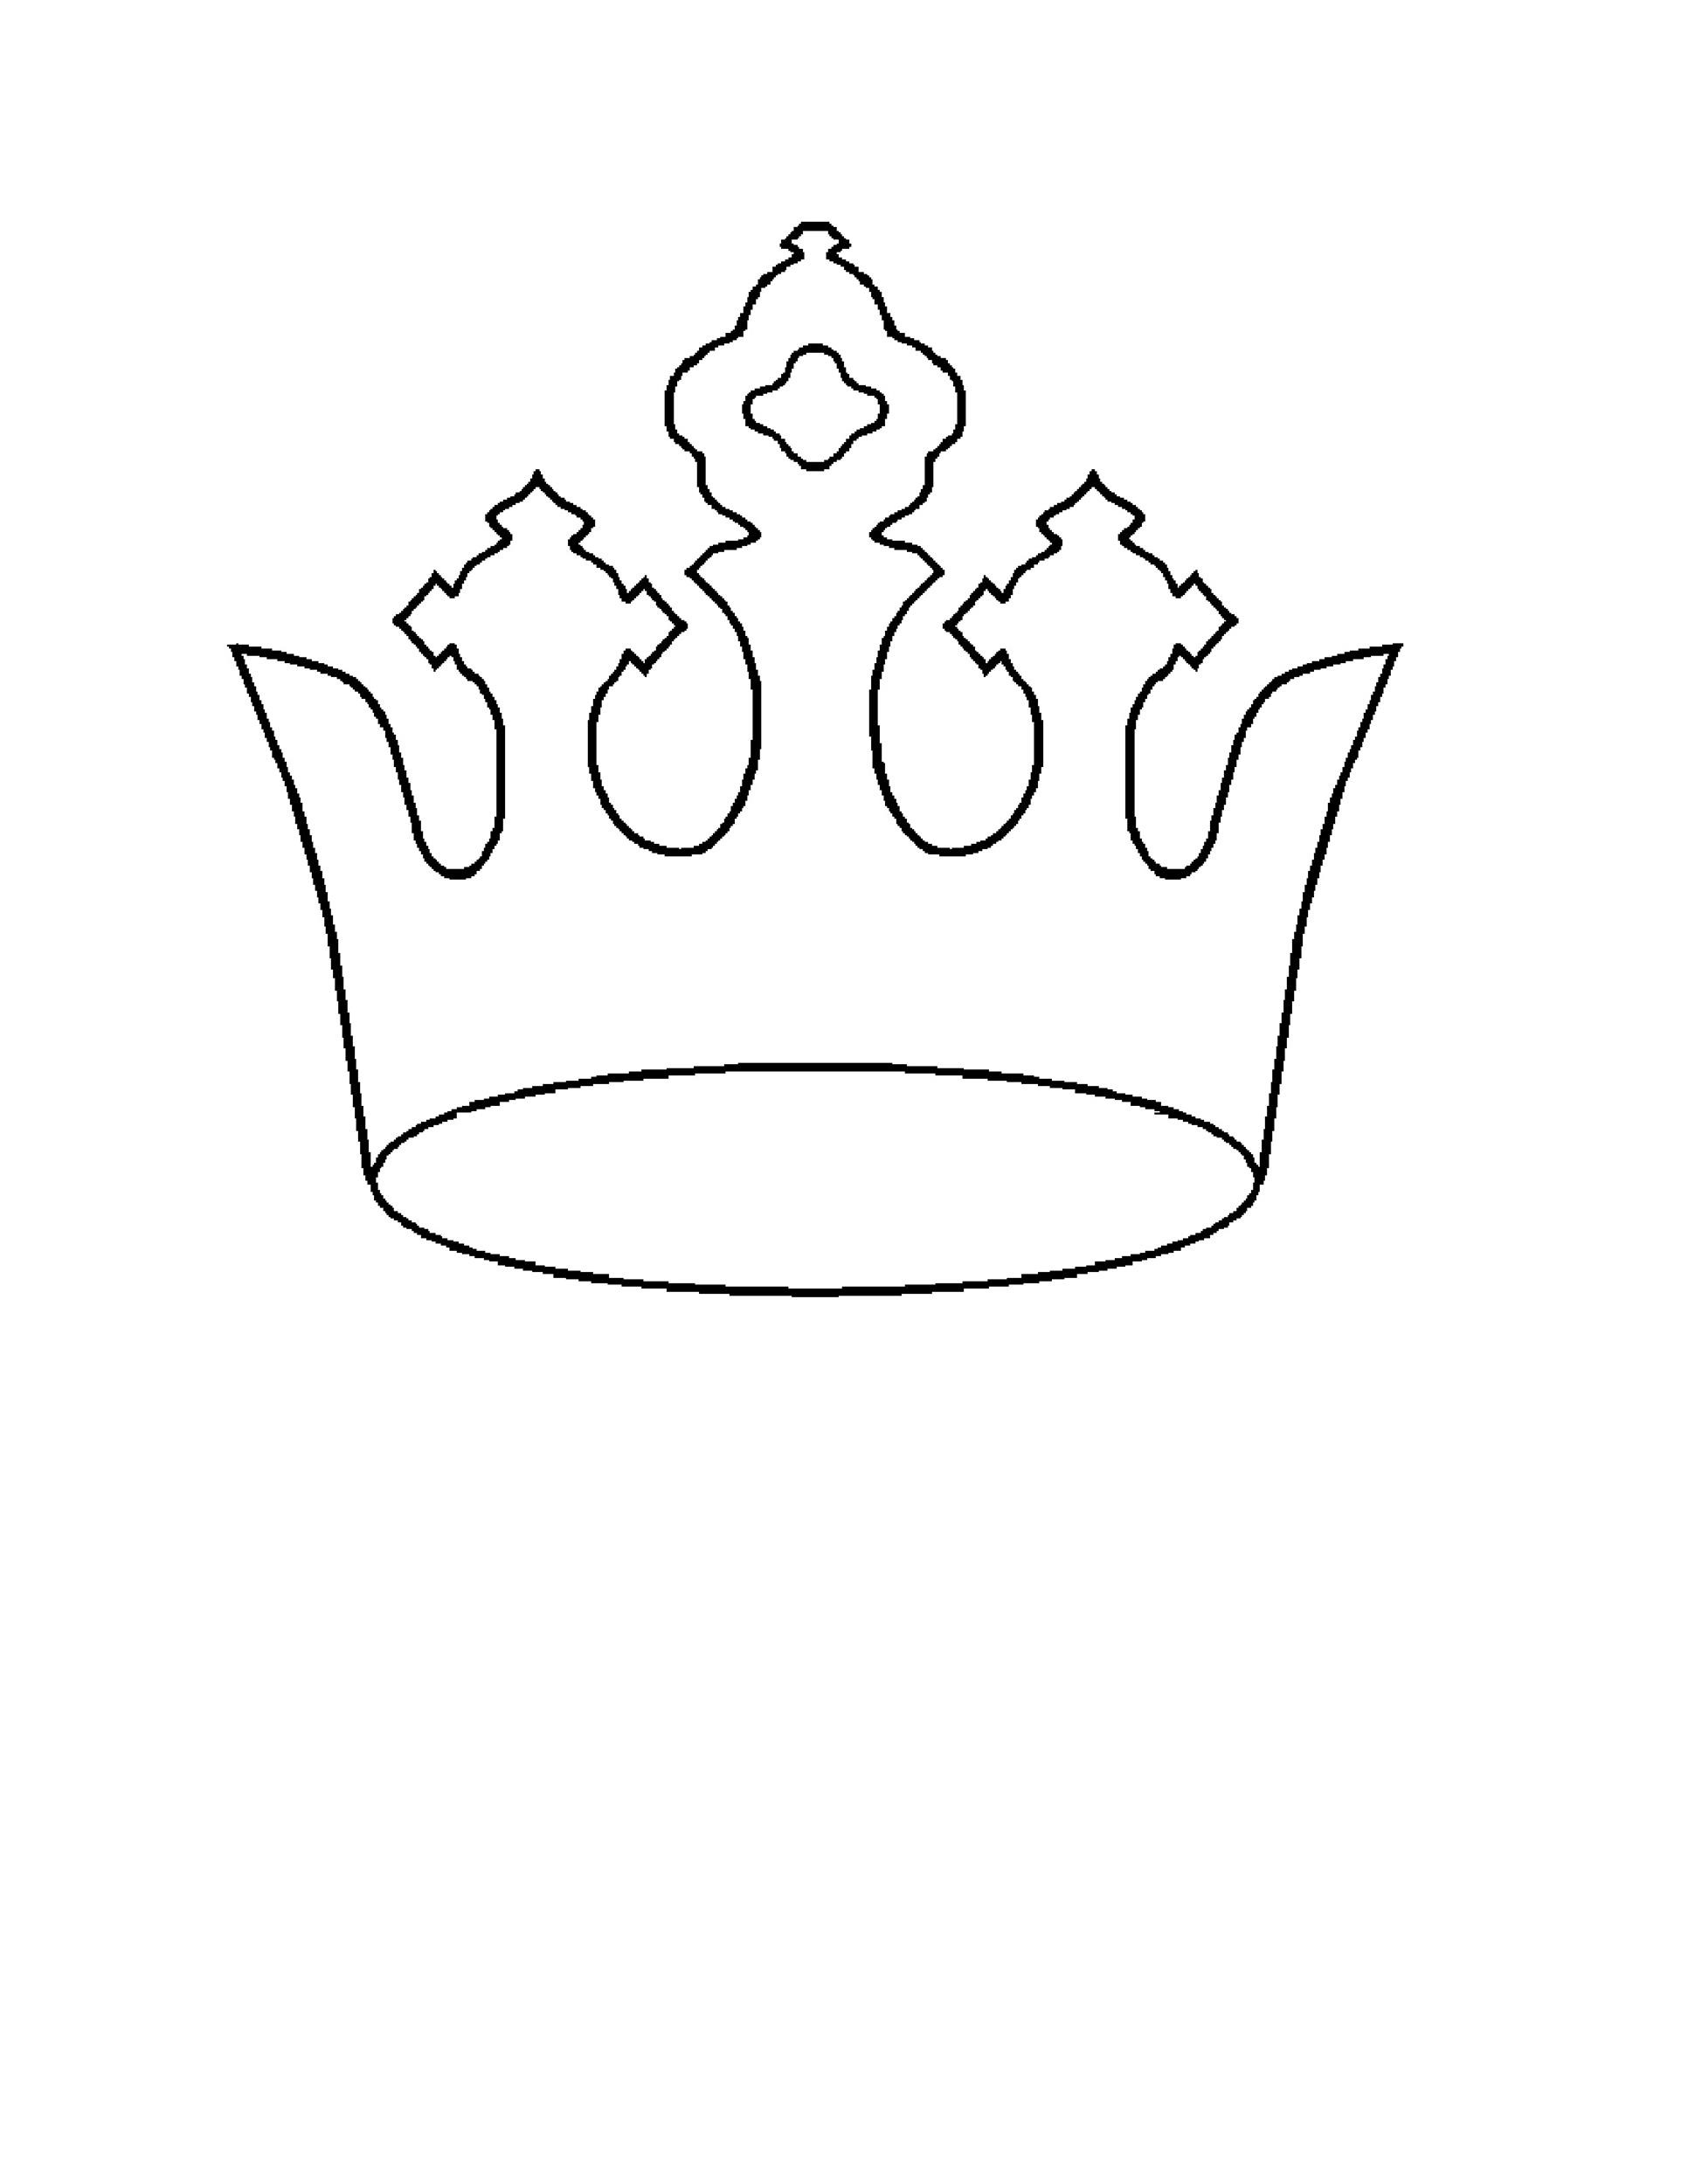 Printable Template Of A Crown Printable Templates